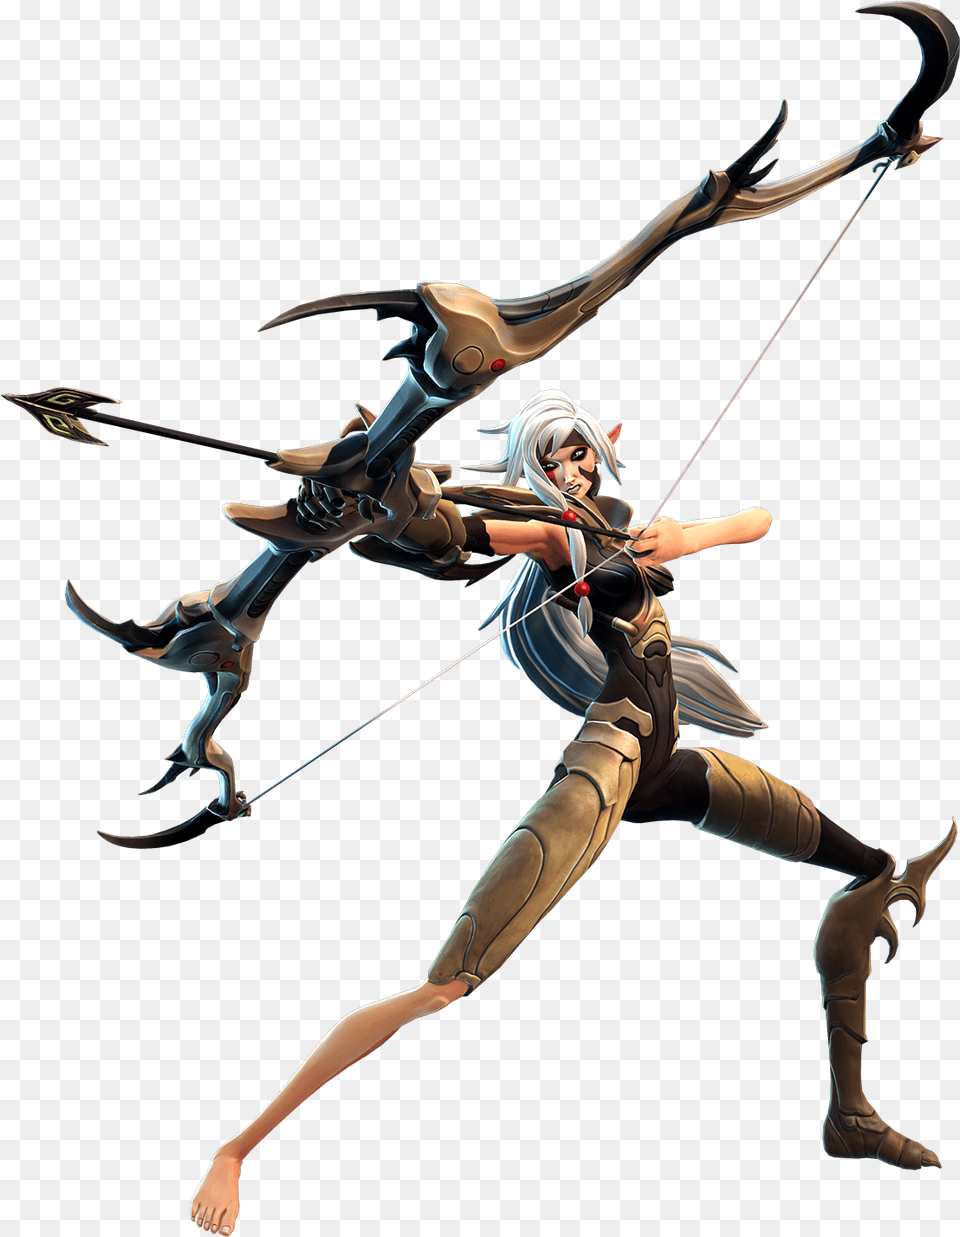 Thorn Battleborn, Archer, Archery, Bow, Weapon Png Image